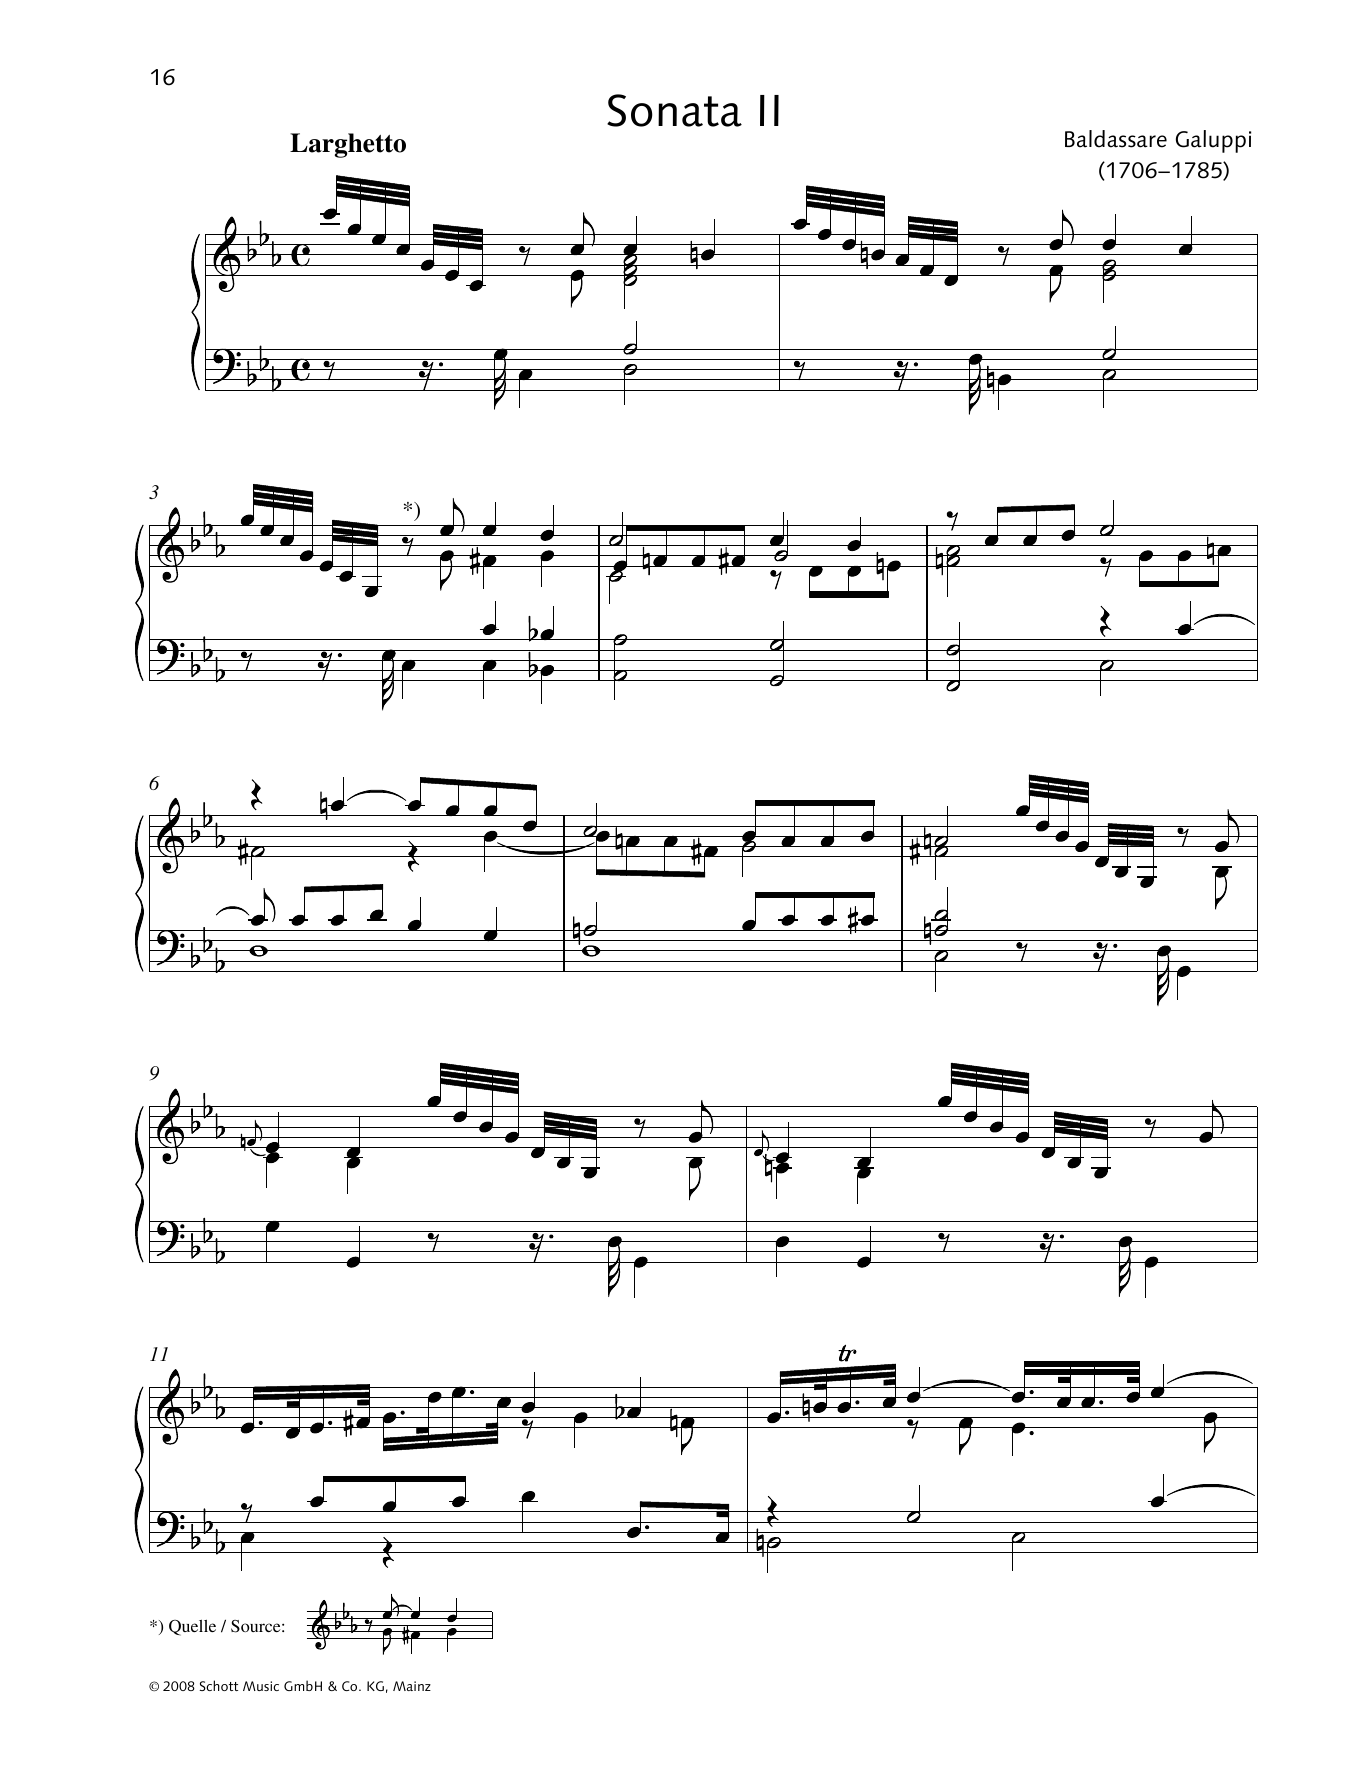 Baldassare Galuppi Sonata II C minor Sheet Music Notes & Chords for Piano Solo - Download or Print PDF